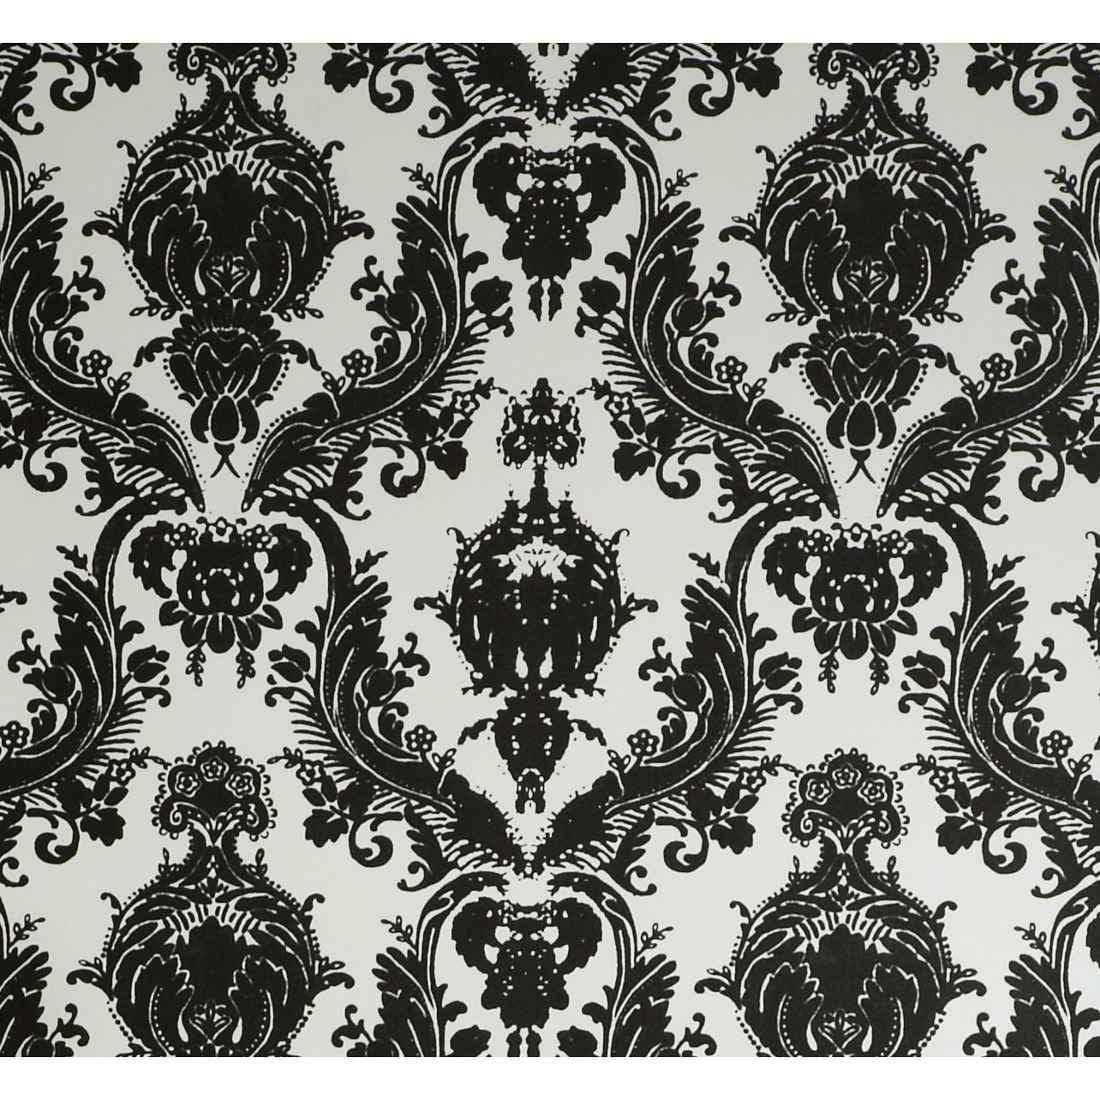  Designs Damsel Self Adhesive Black and White Temporary Wallpaper 1100x1100